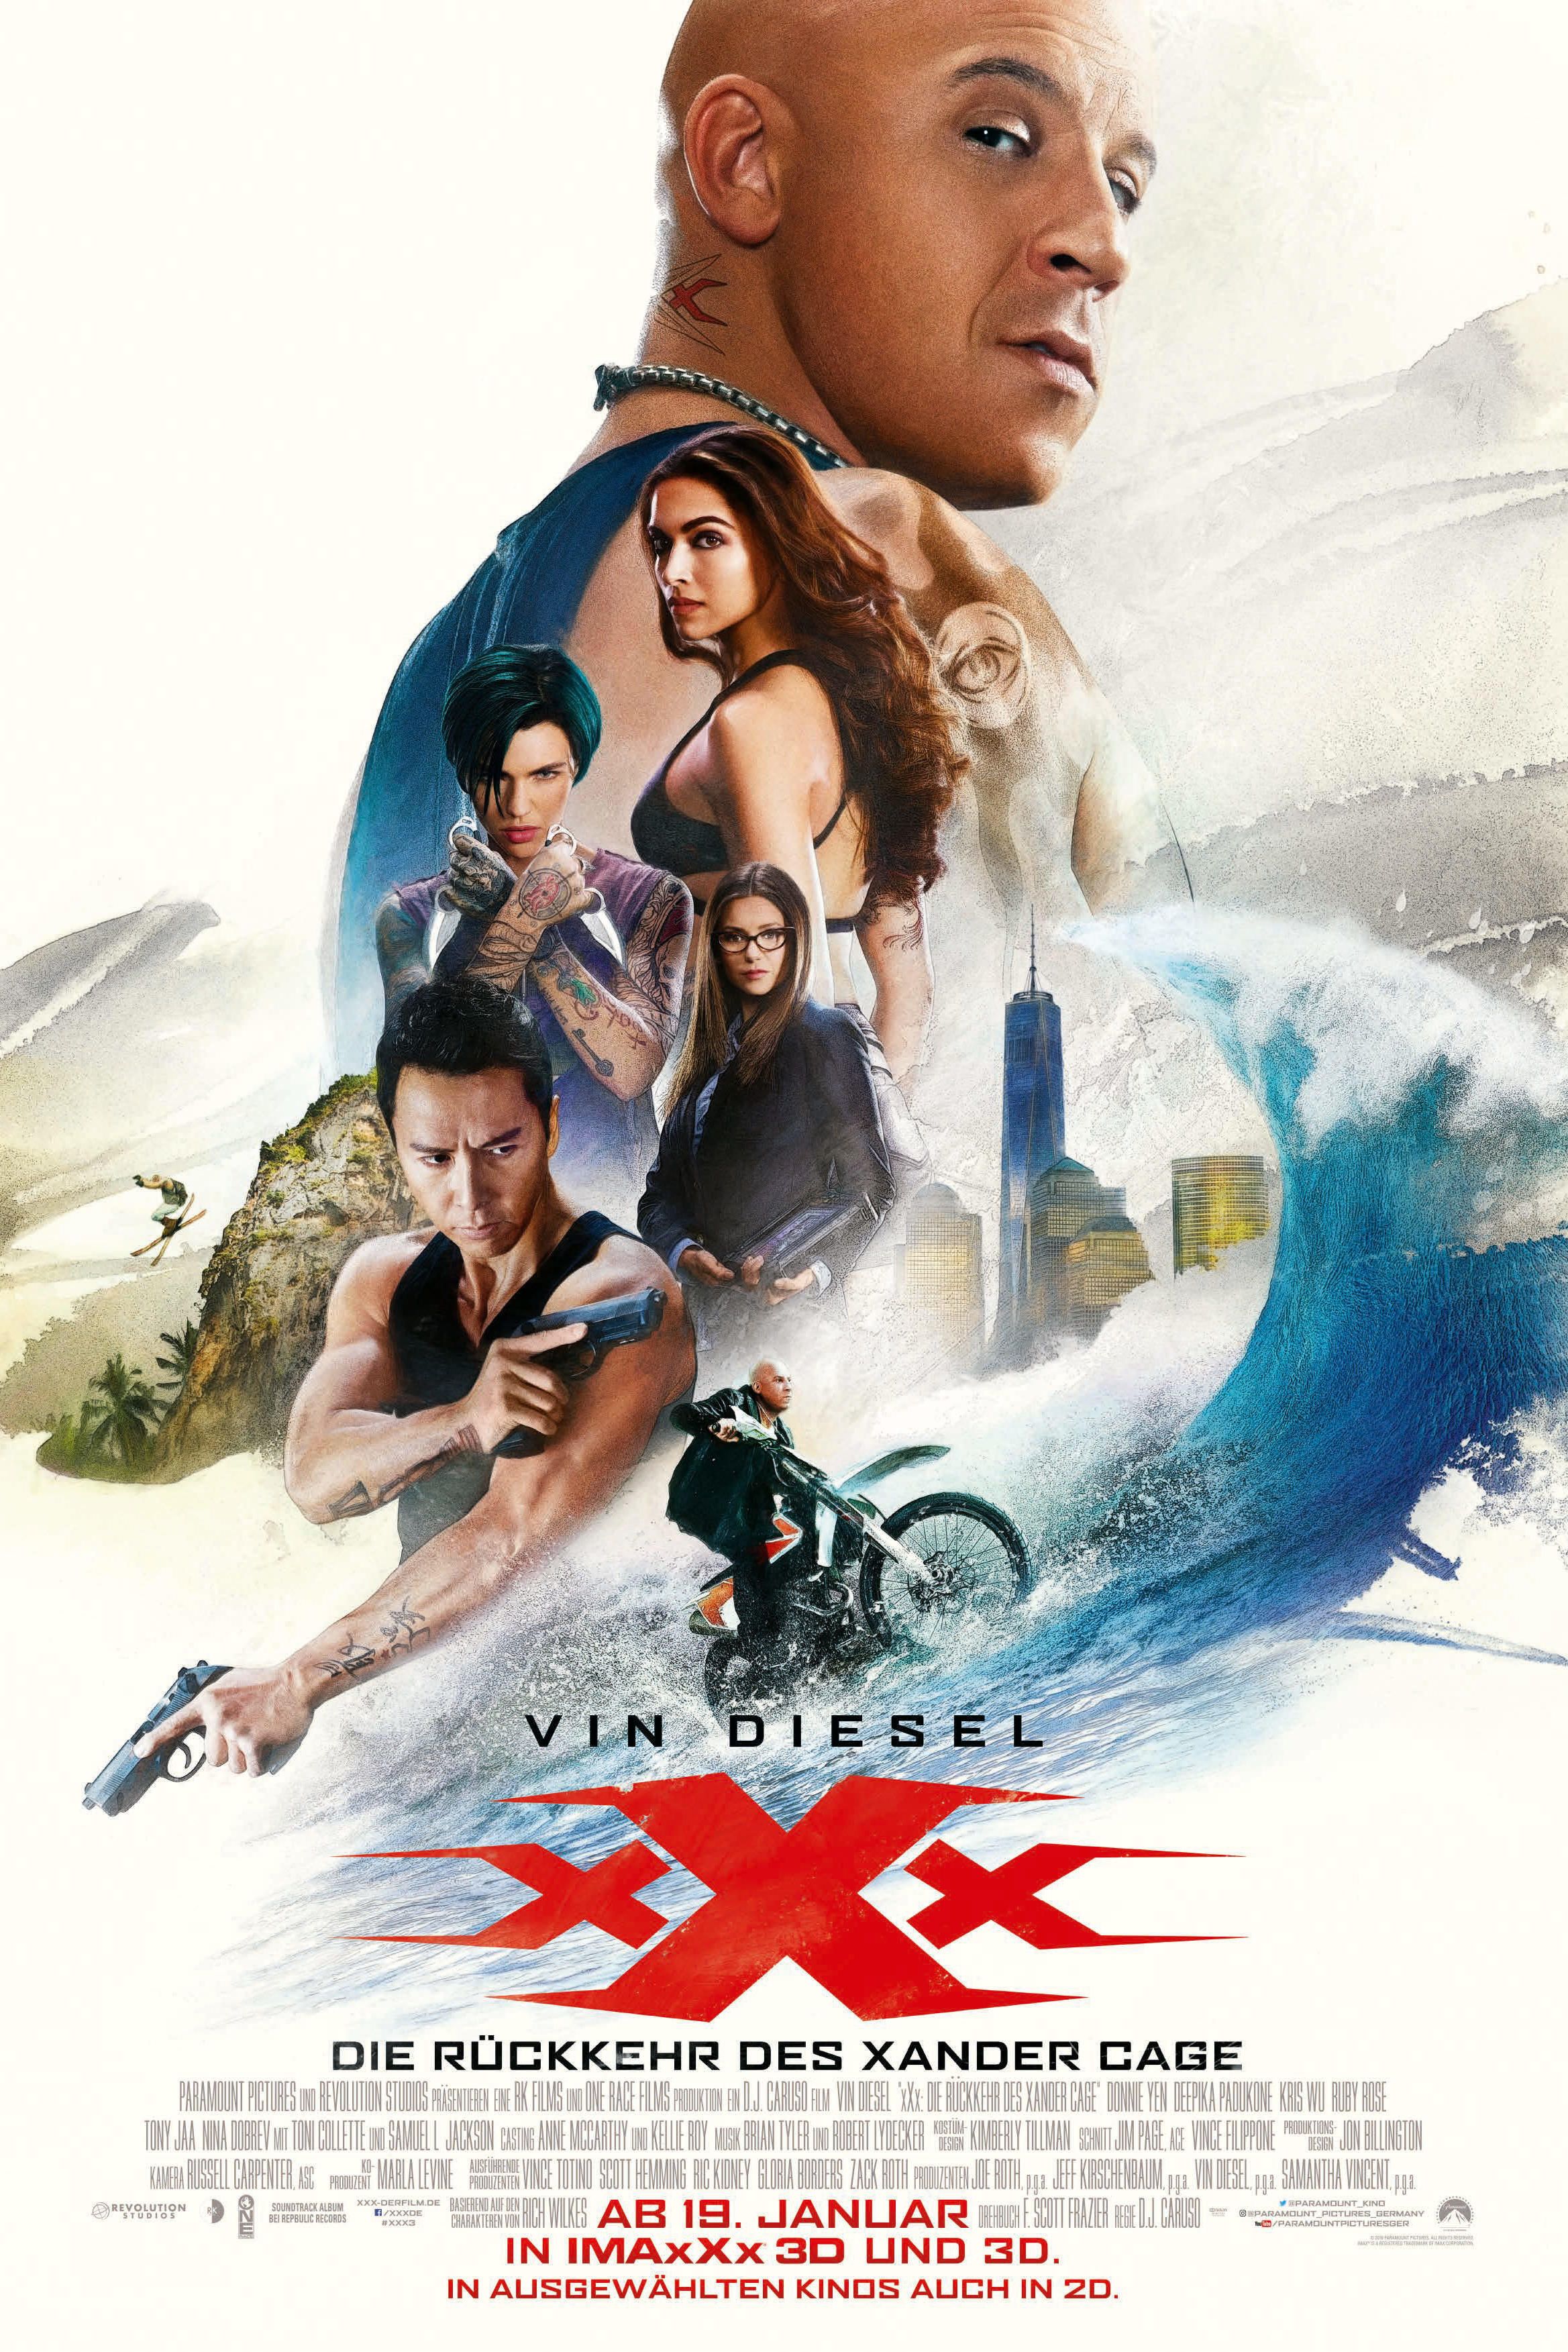 Xxx return of xander cage movie similar